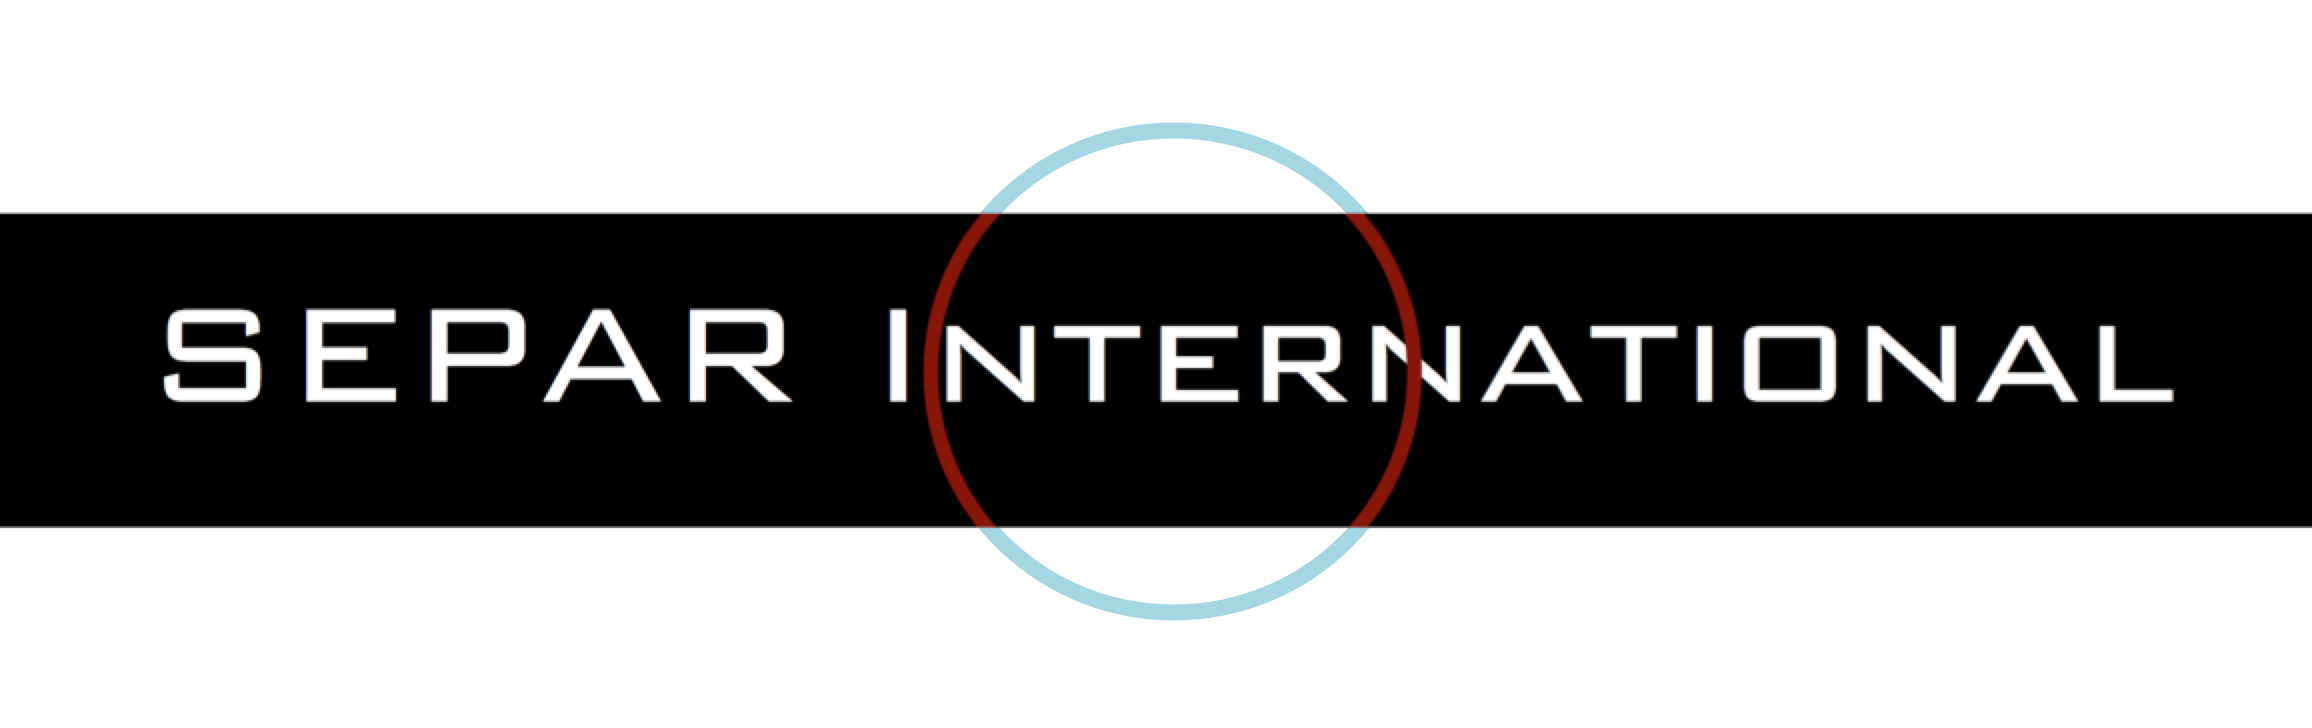 SEPAR International Group logo